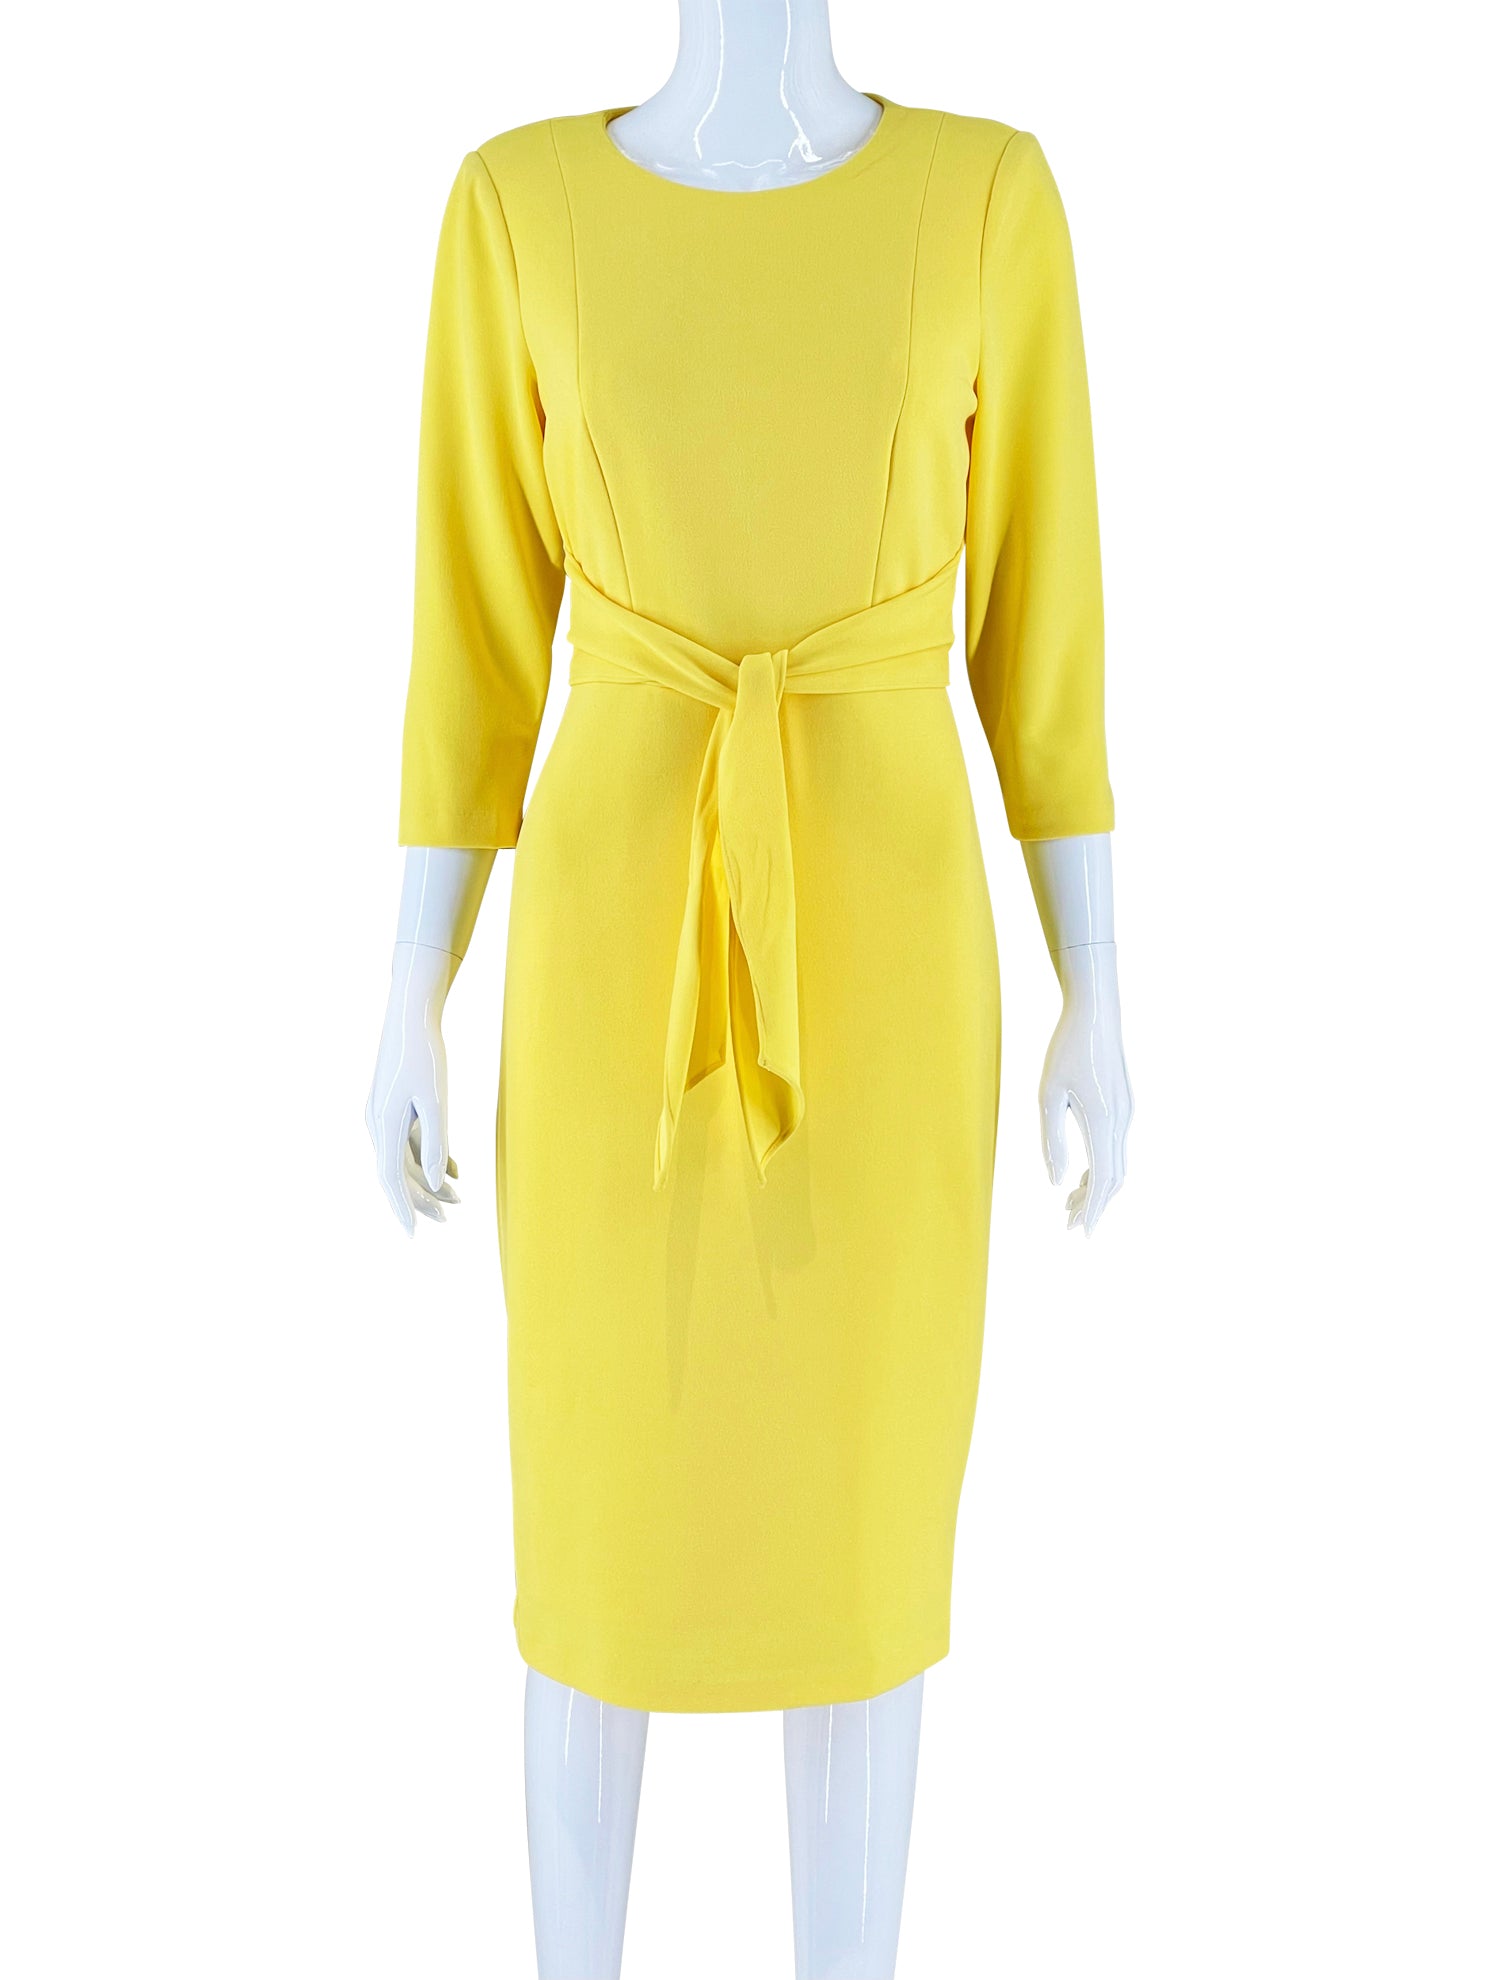 Adrianna Papell Yellow Tie Dress